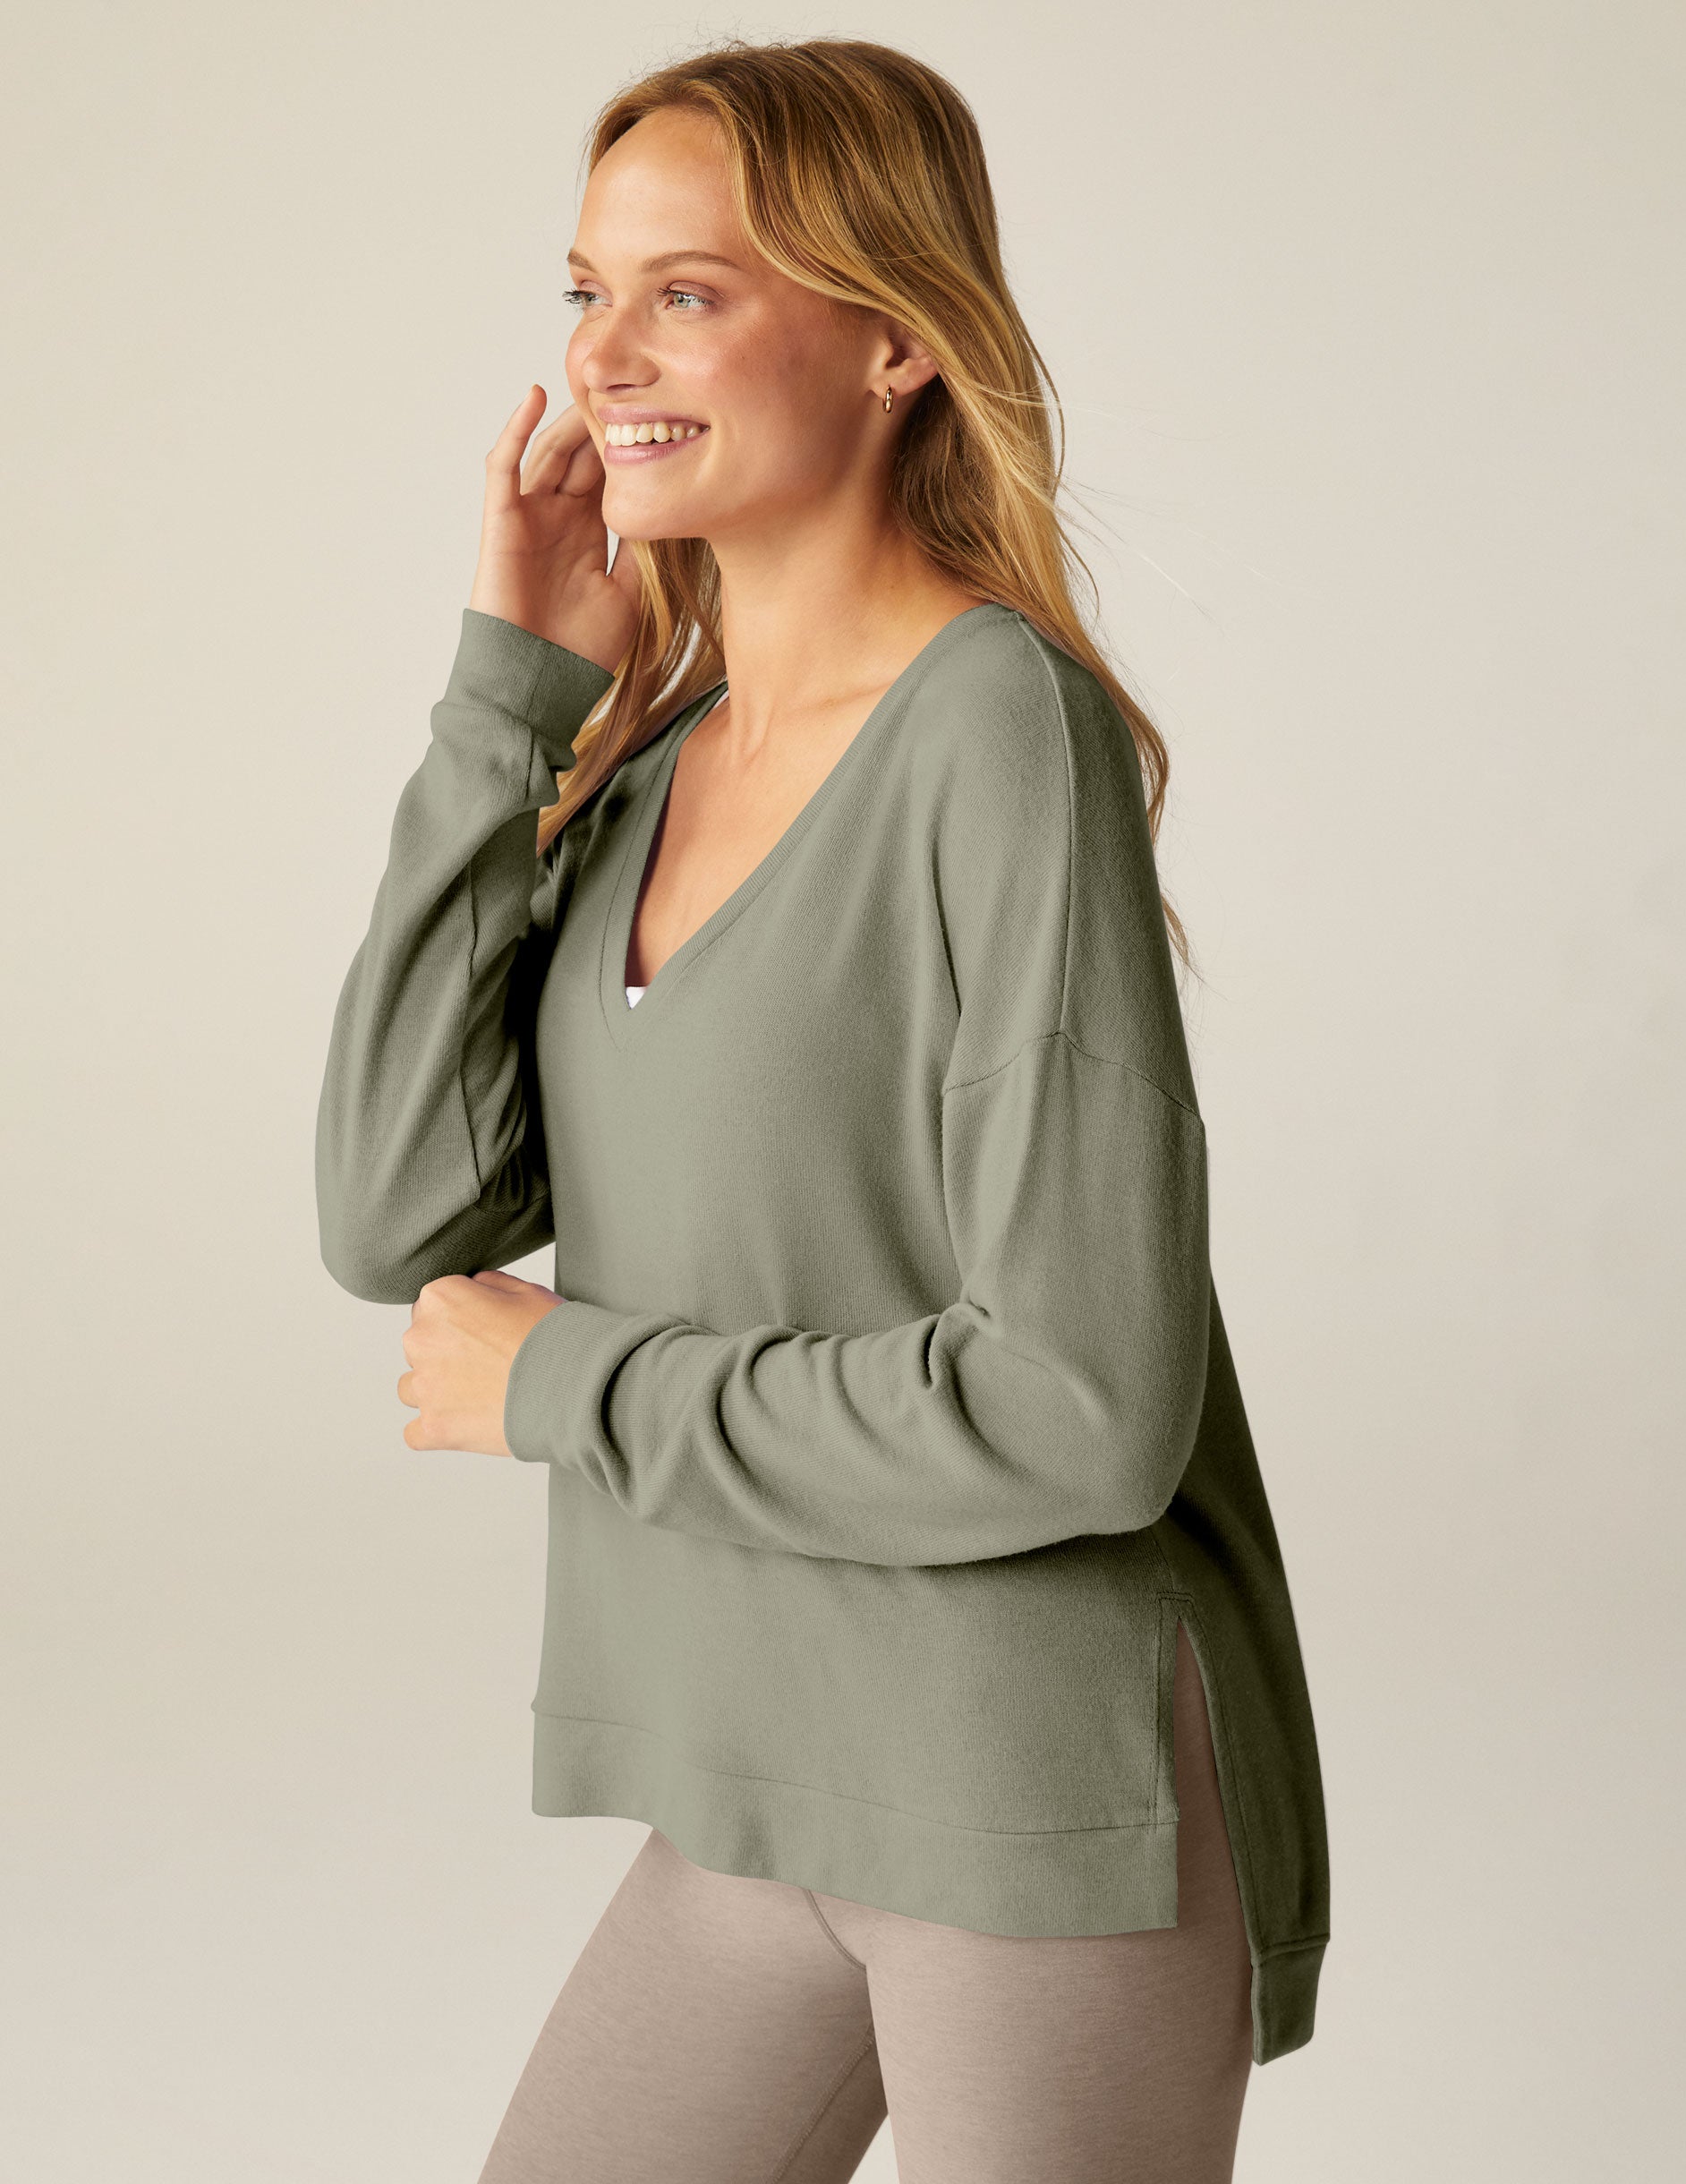 green v-neck long sleeve pullover